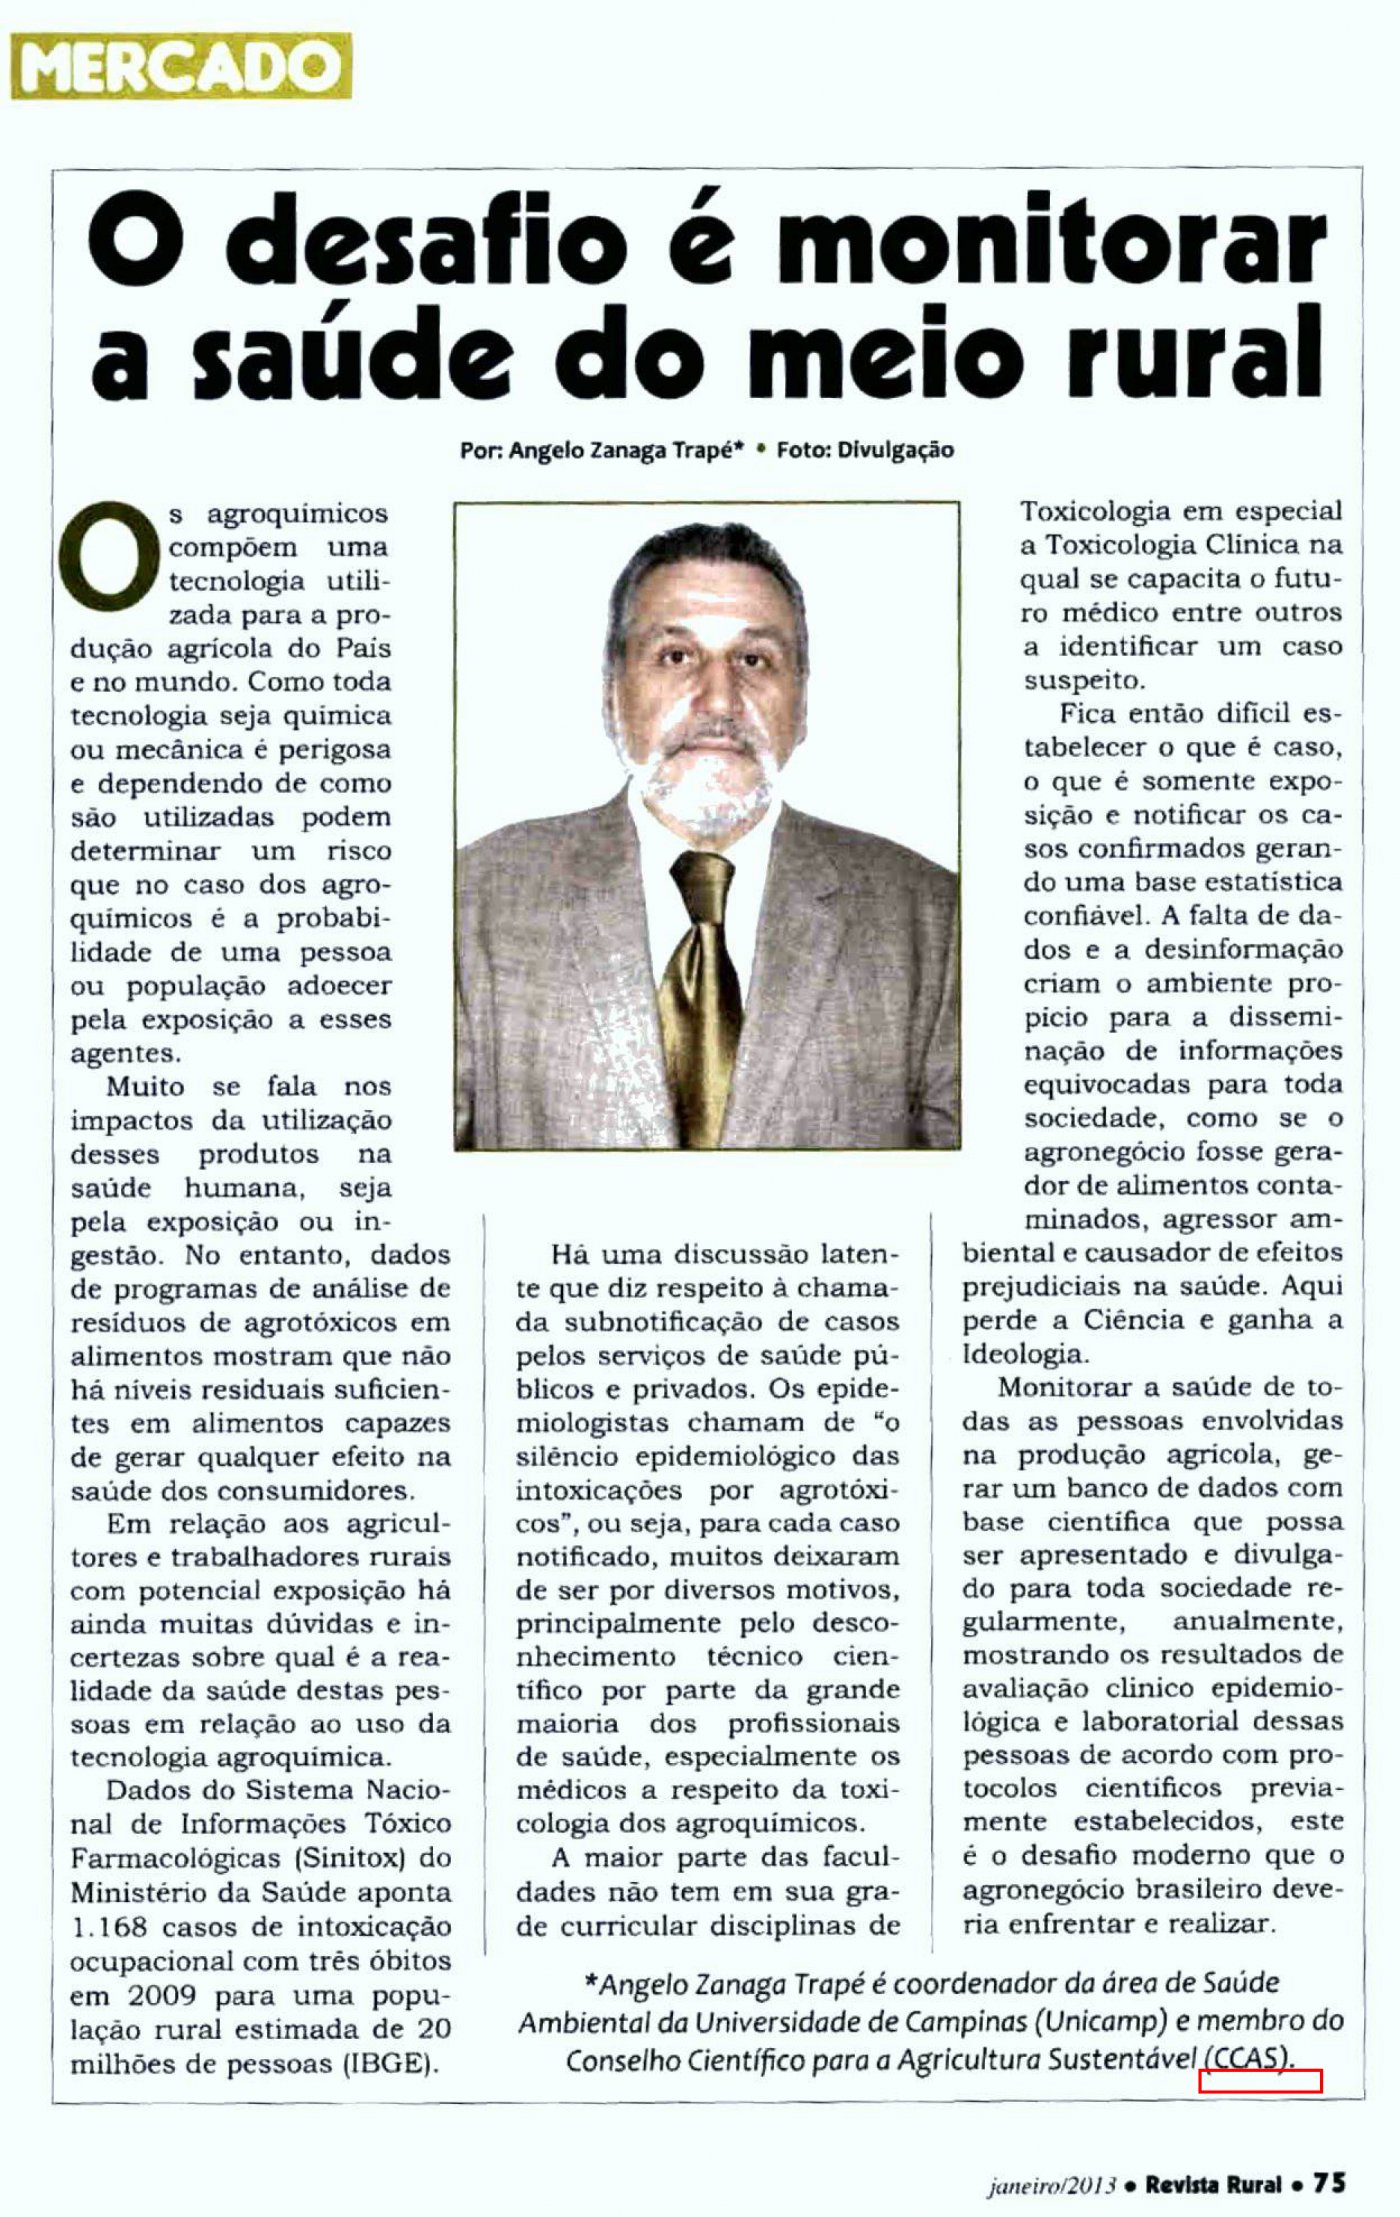 Revista Rural publica artigo de conselheiro do CCAS